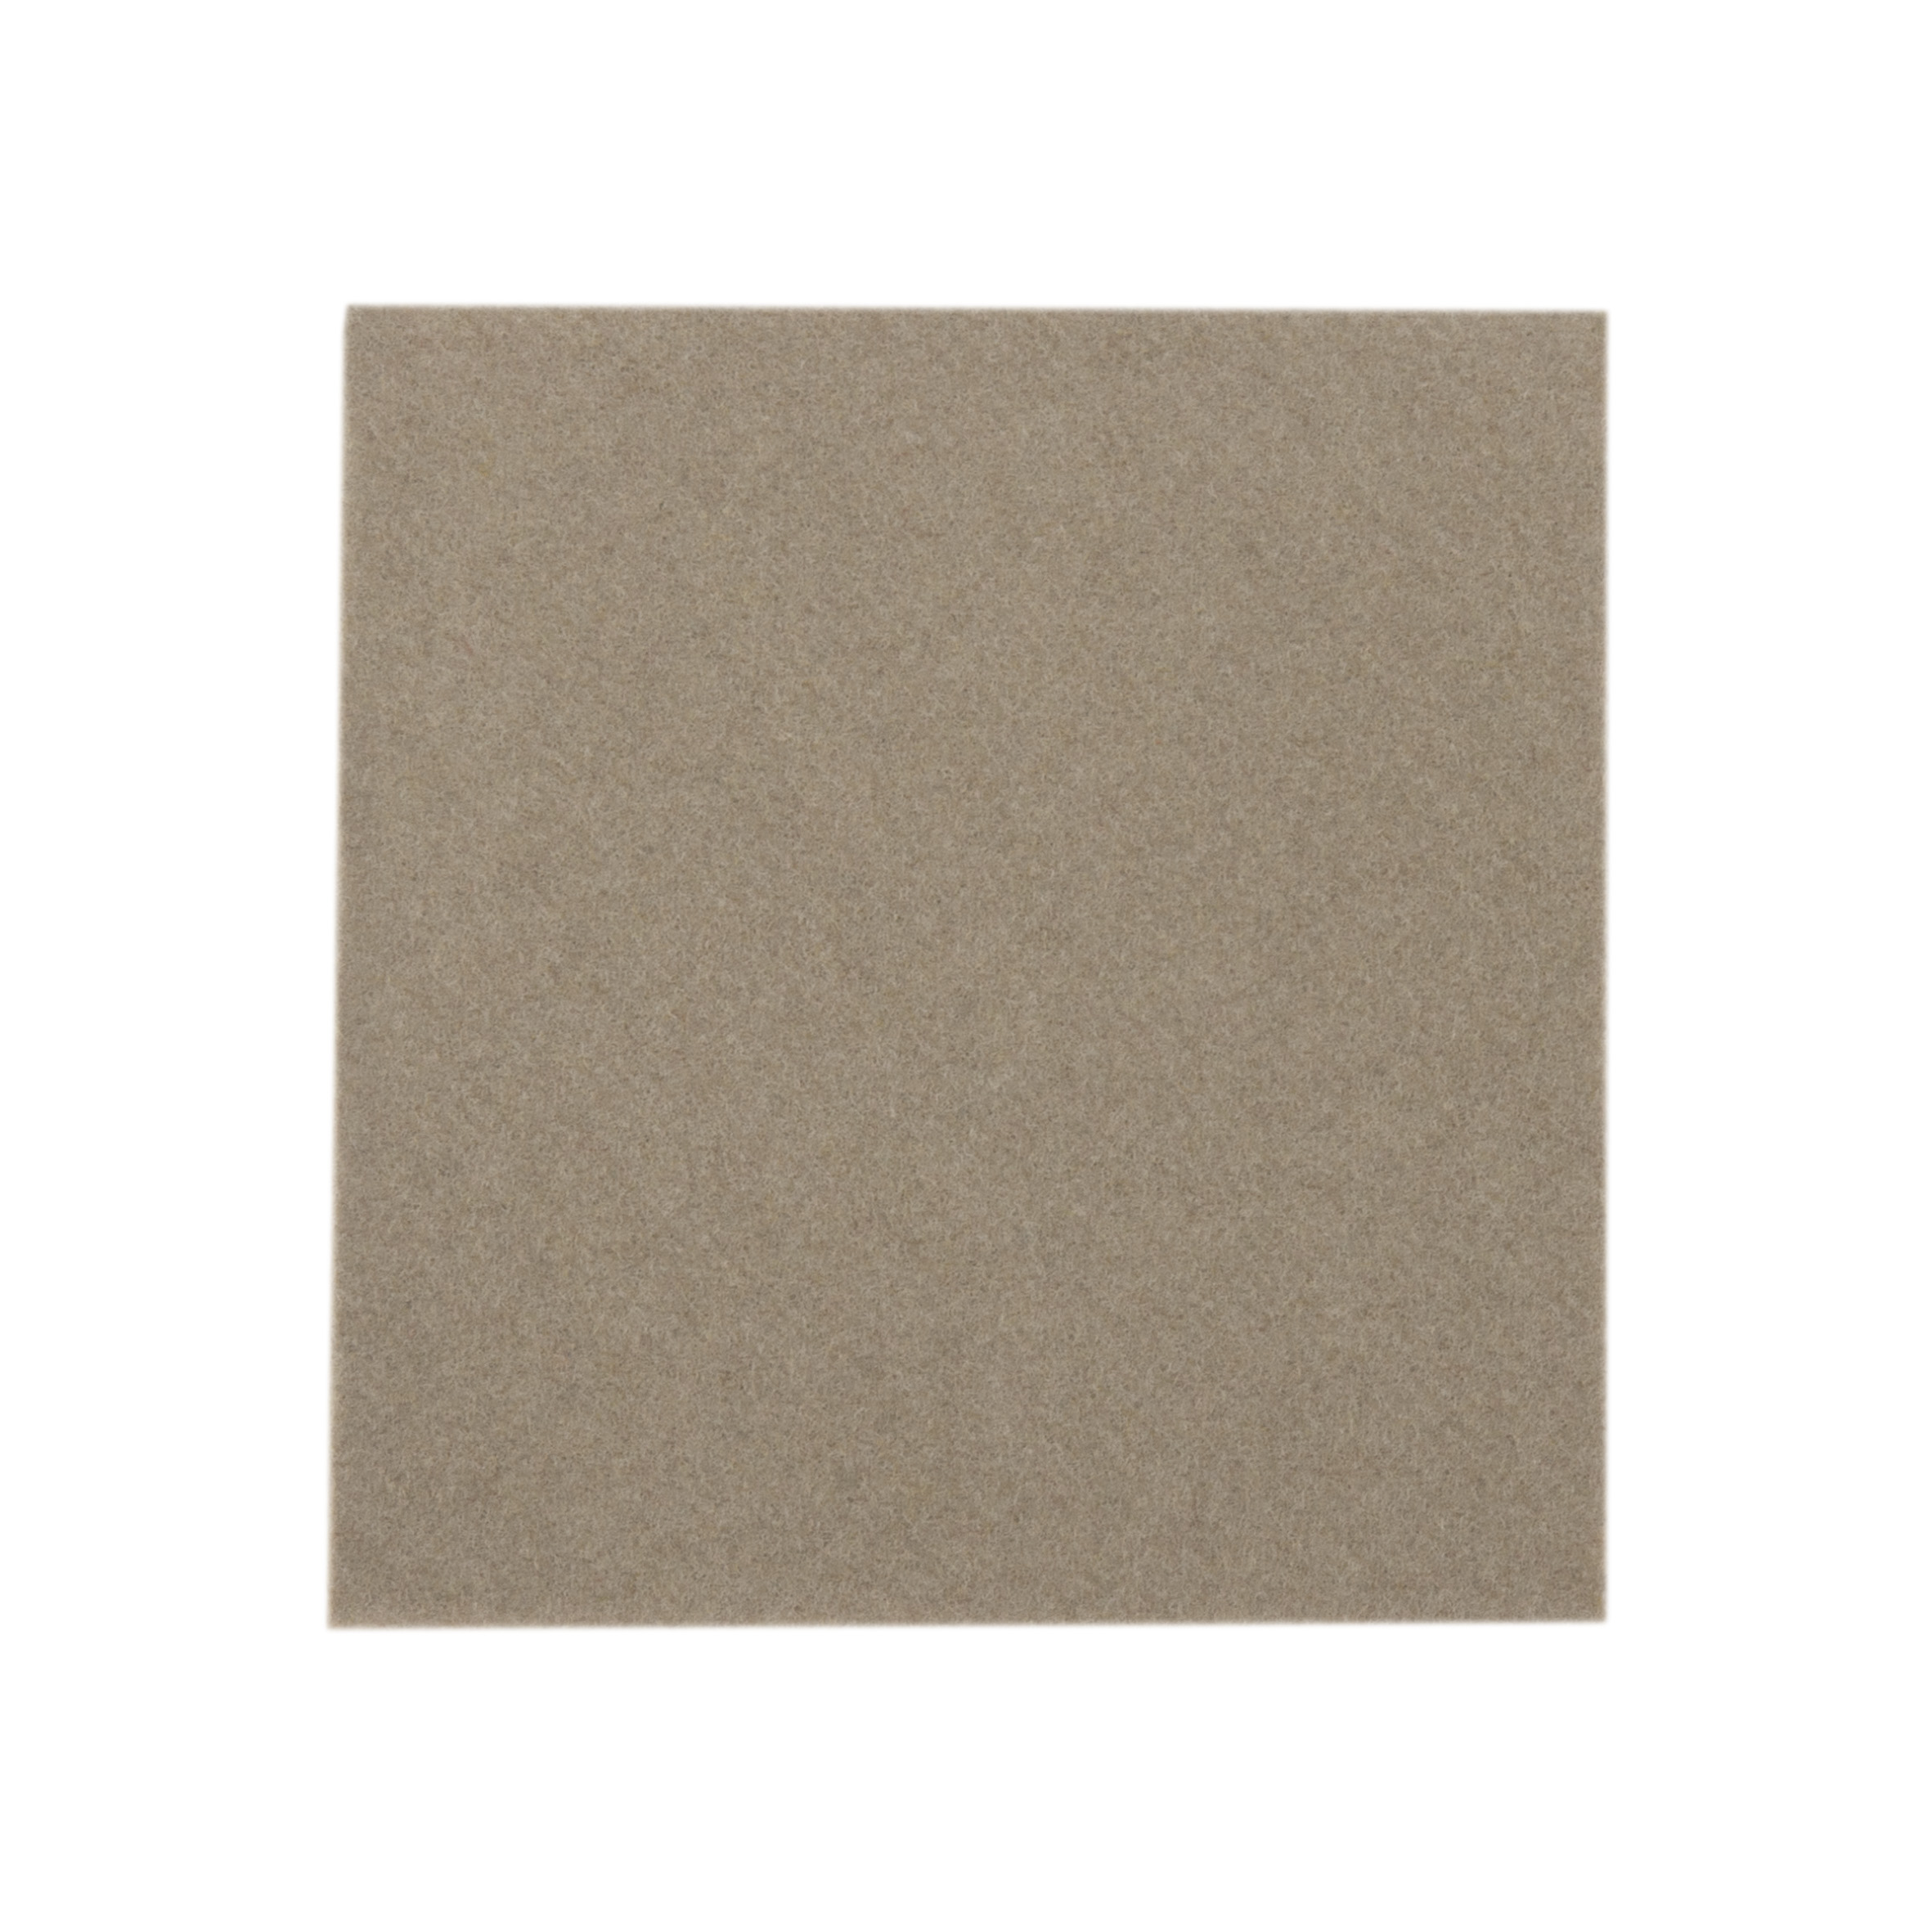 Mank Serviette Linclass-Light 1/4 Falz, 20 x 20 cm, Basic beige-grau